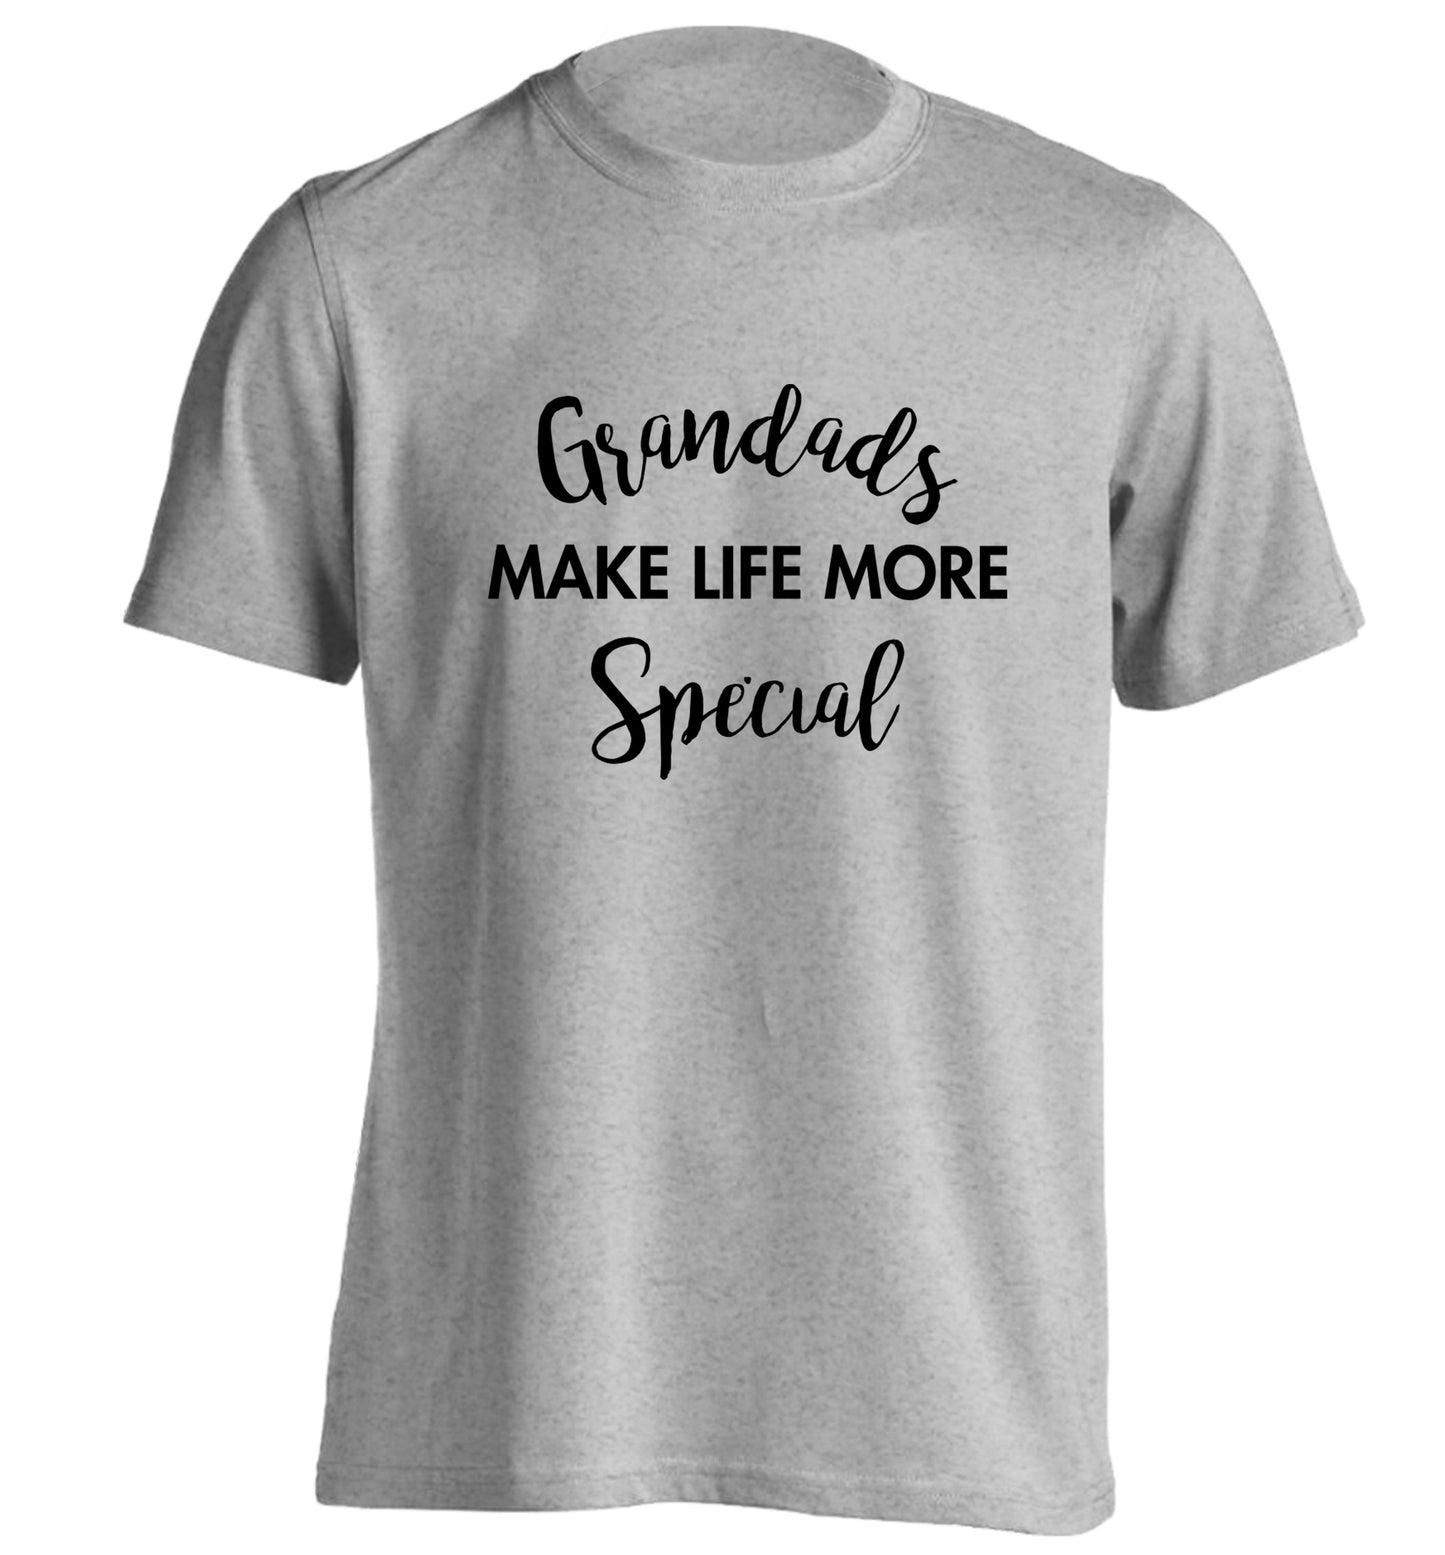 Grandads make life more special adults unisex grey Tshirt 2XL